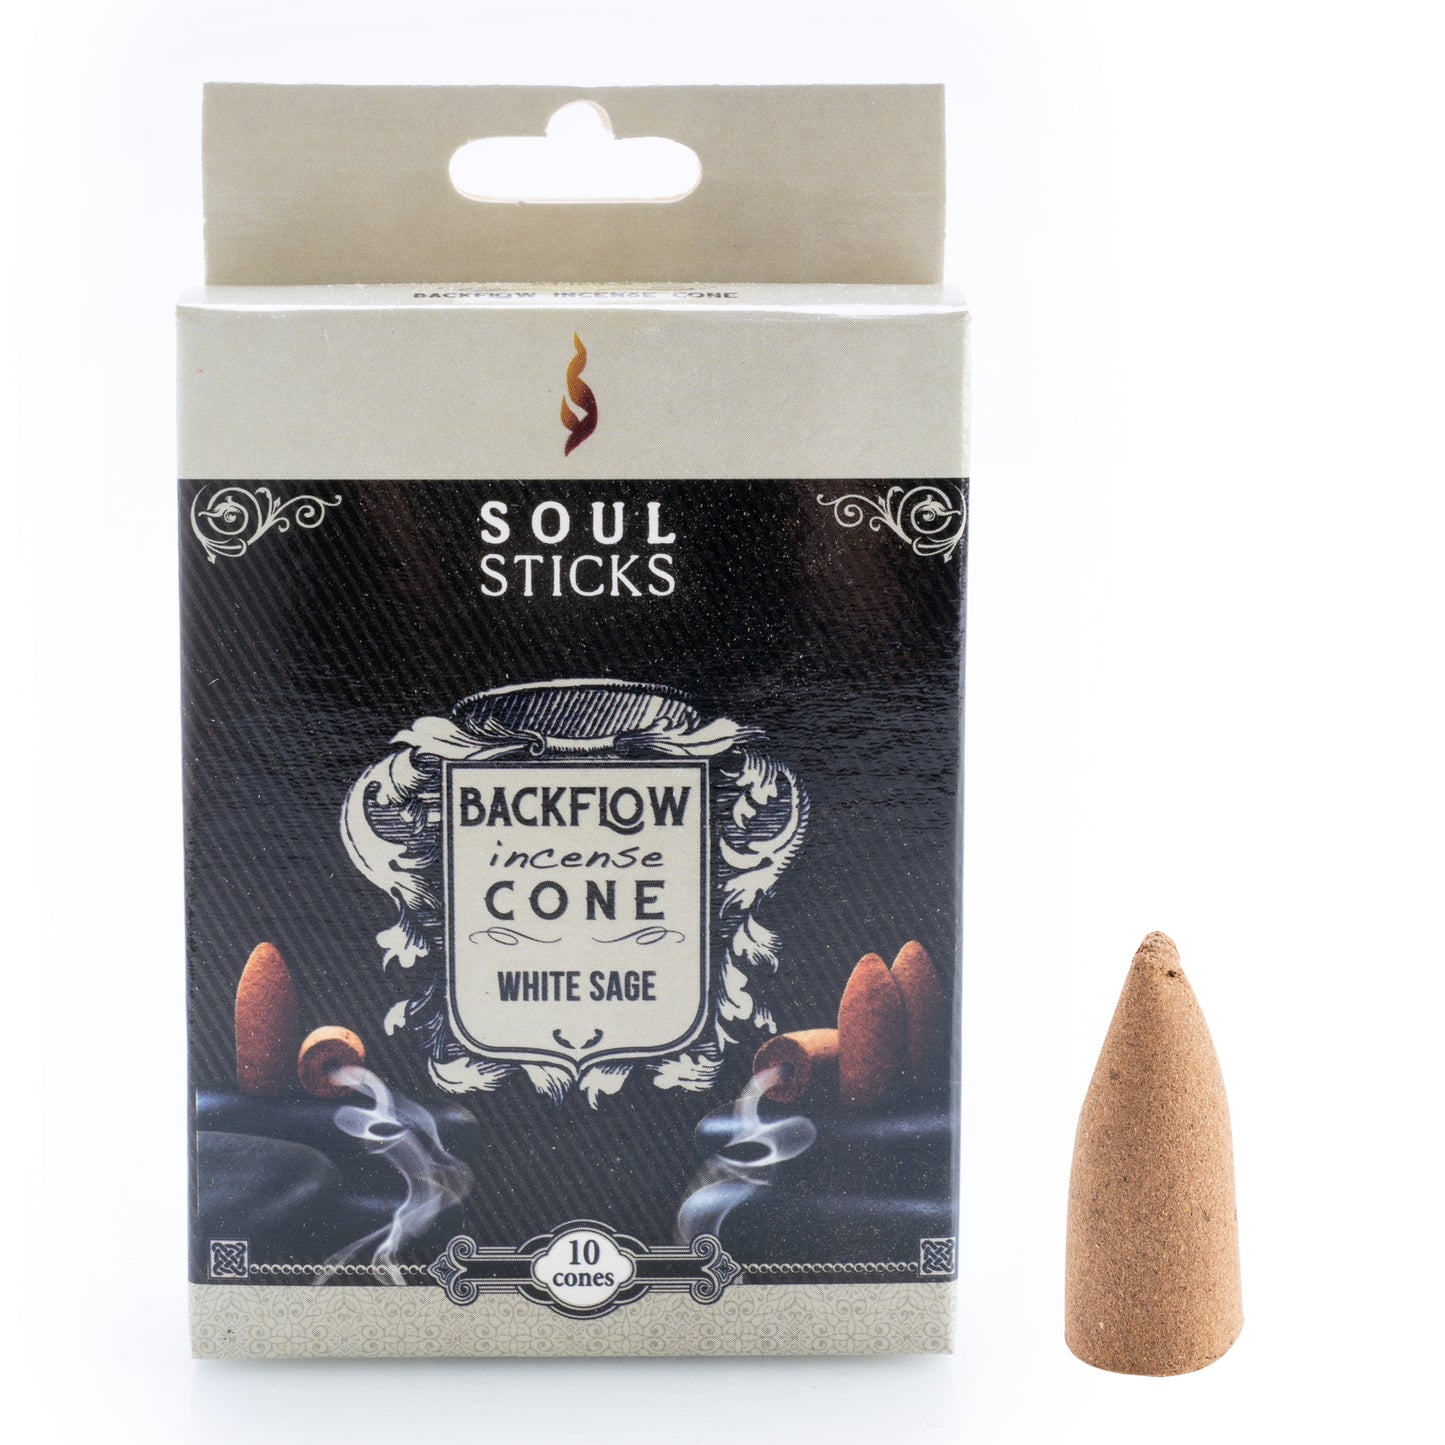 Soul Sticks White Sage Backflow Incense Cone - Spirit & Stone